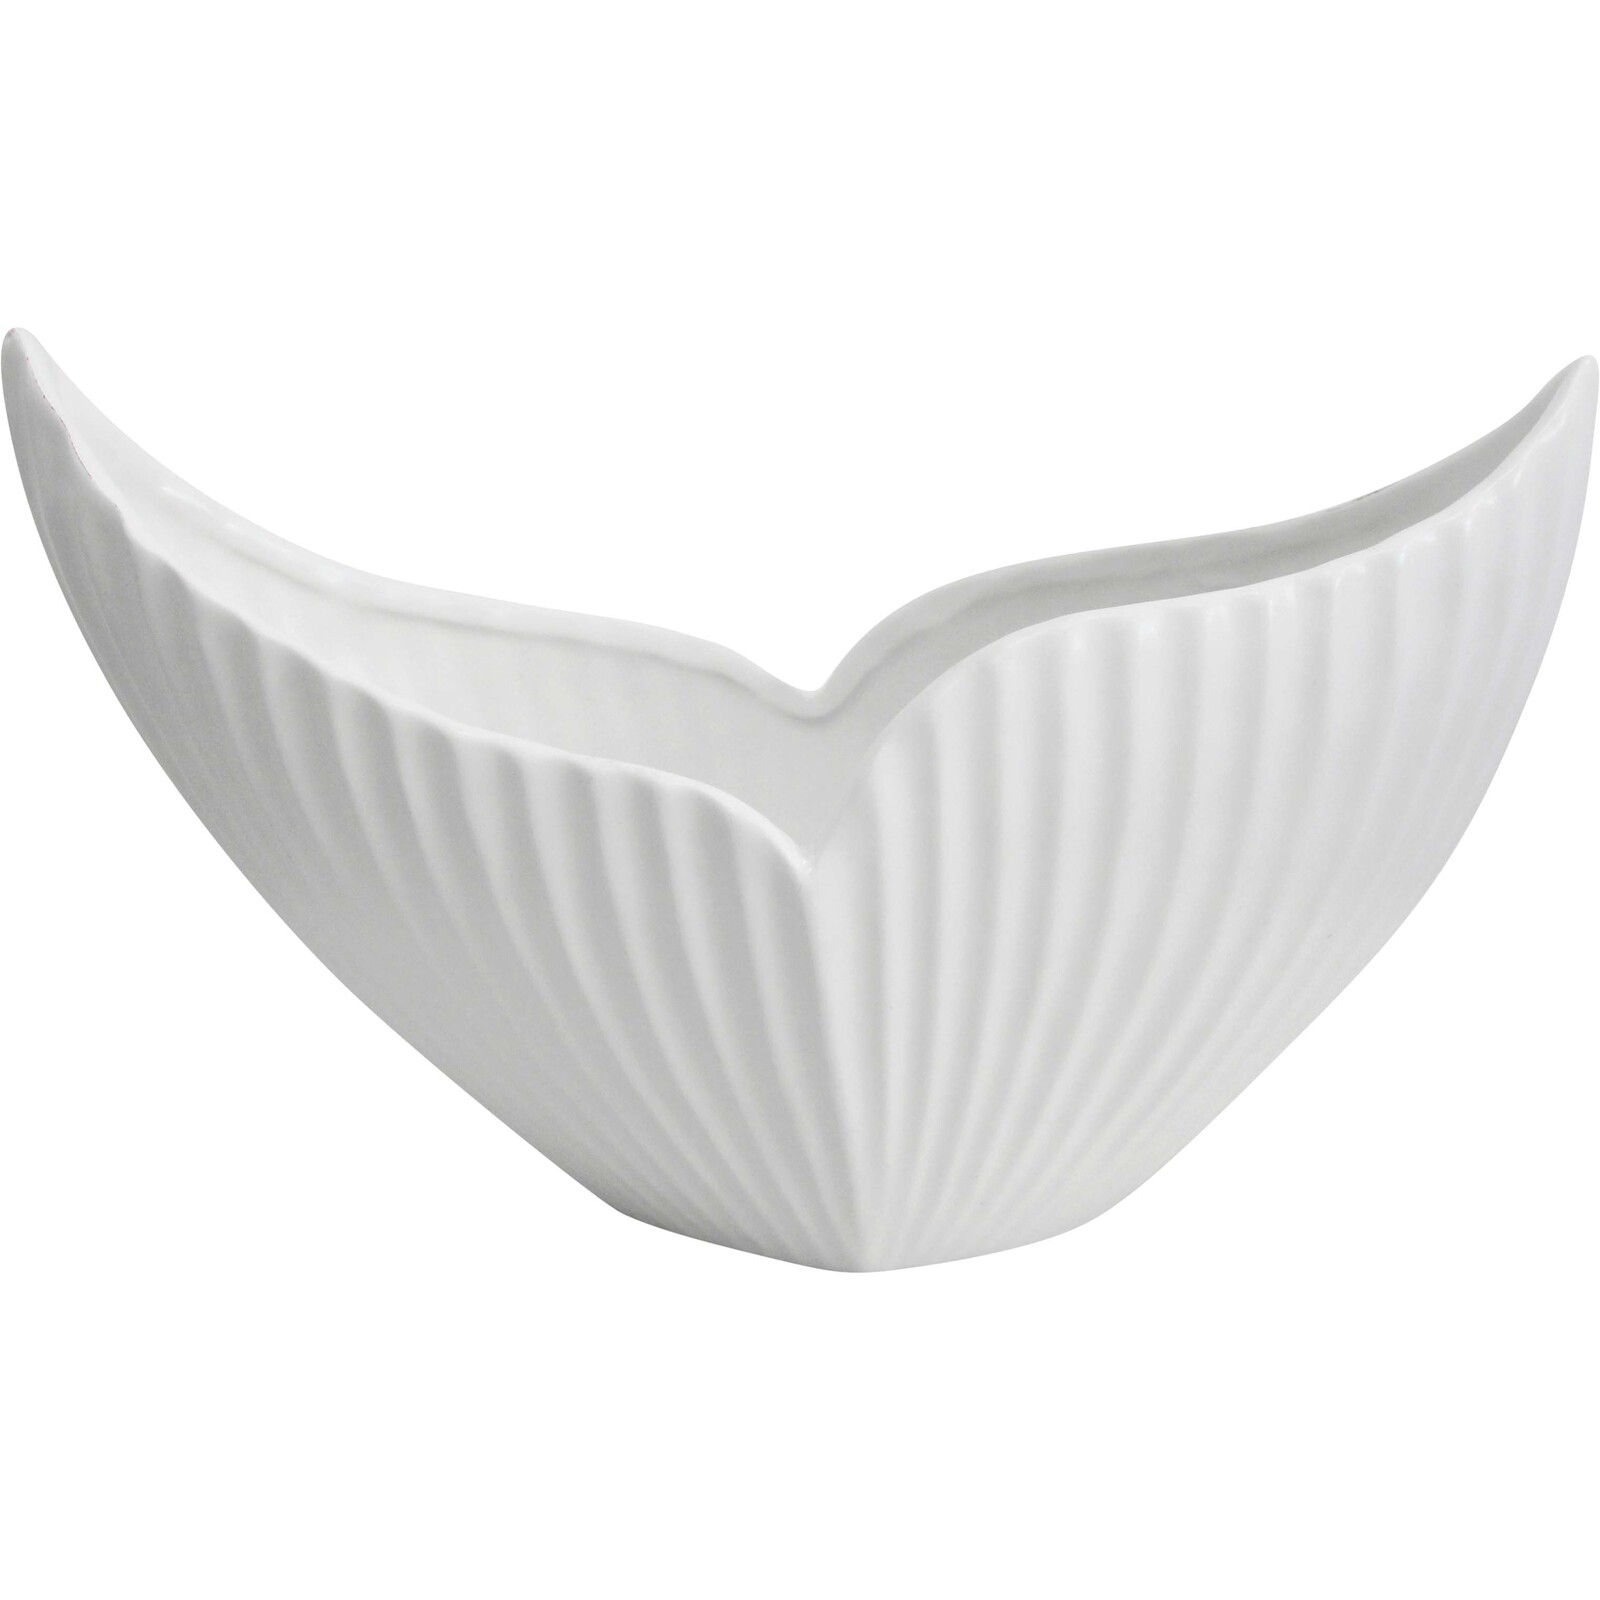 Lrg Whale Bowl/Vase